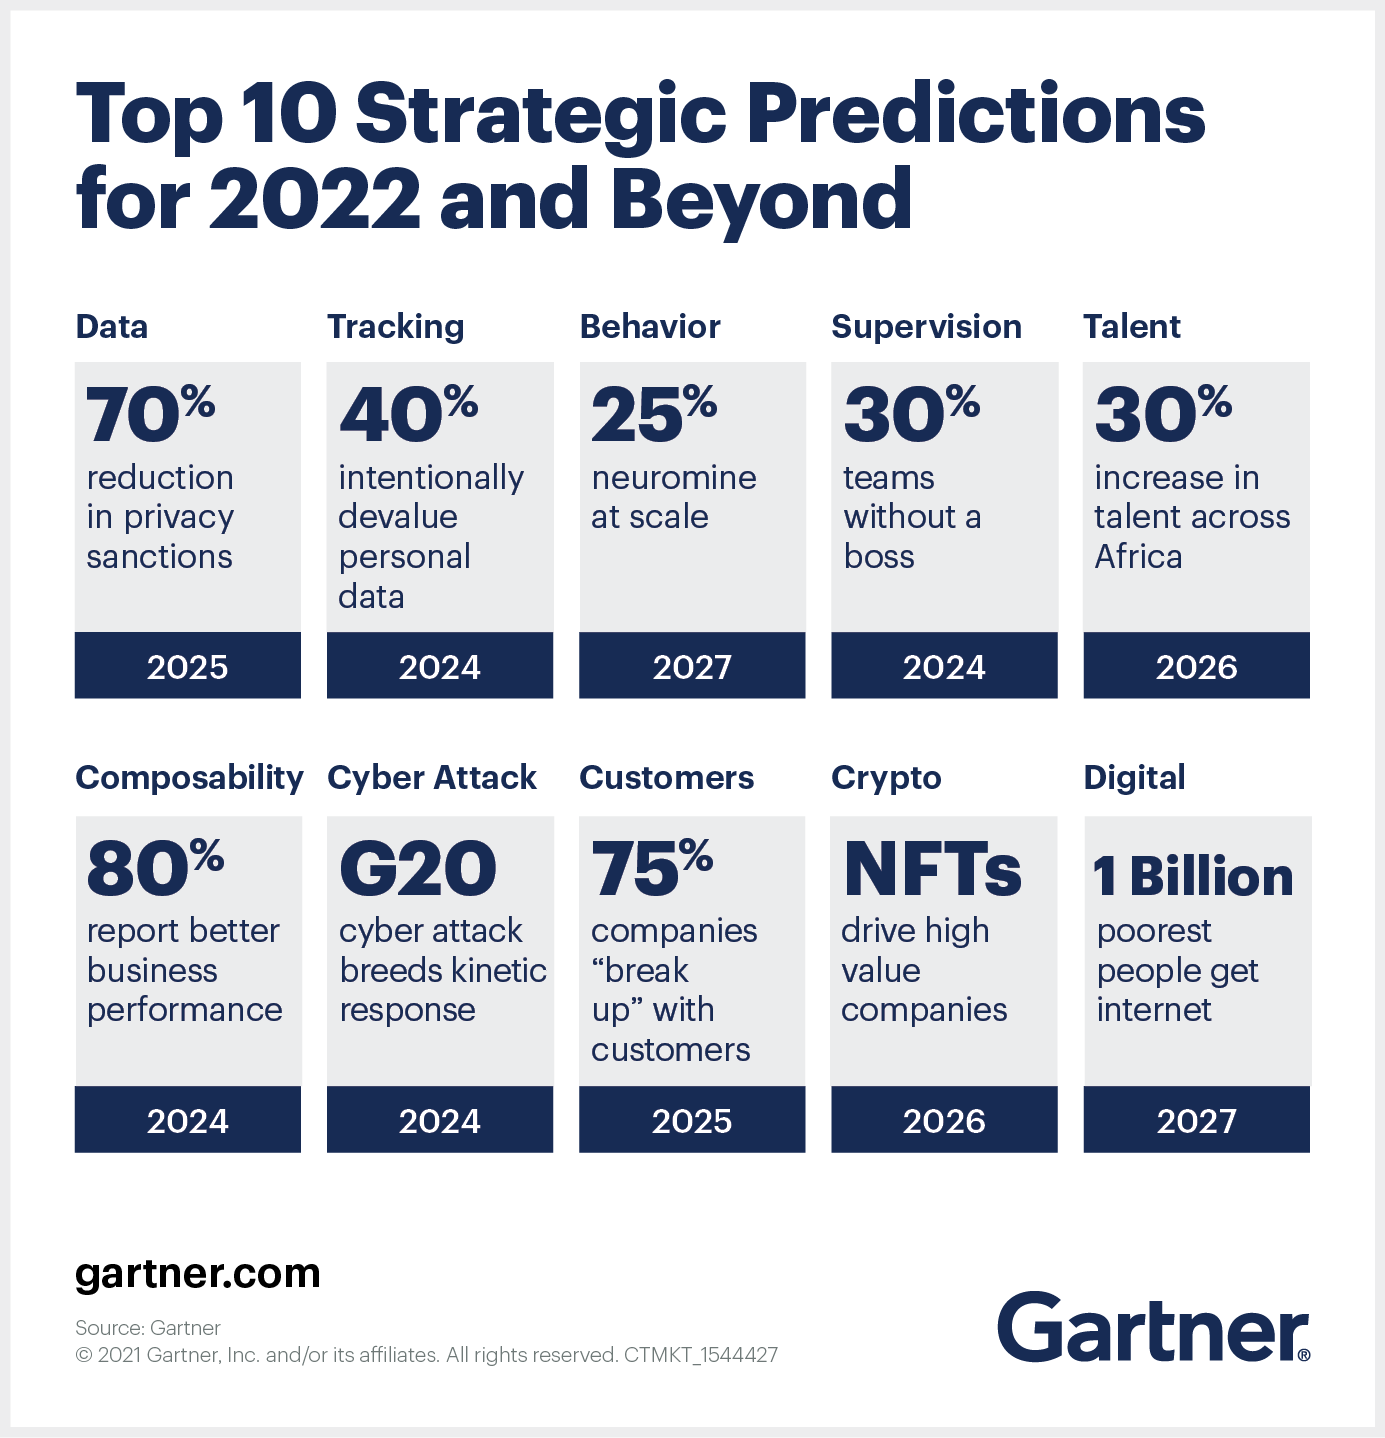 Top 10 Strategic Predictions for 2022